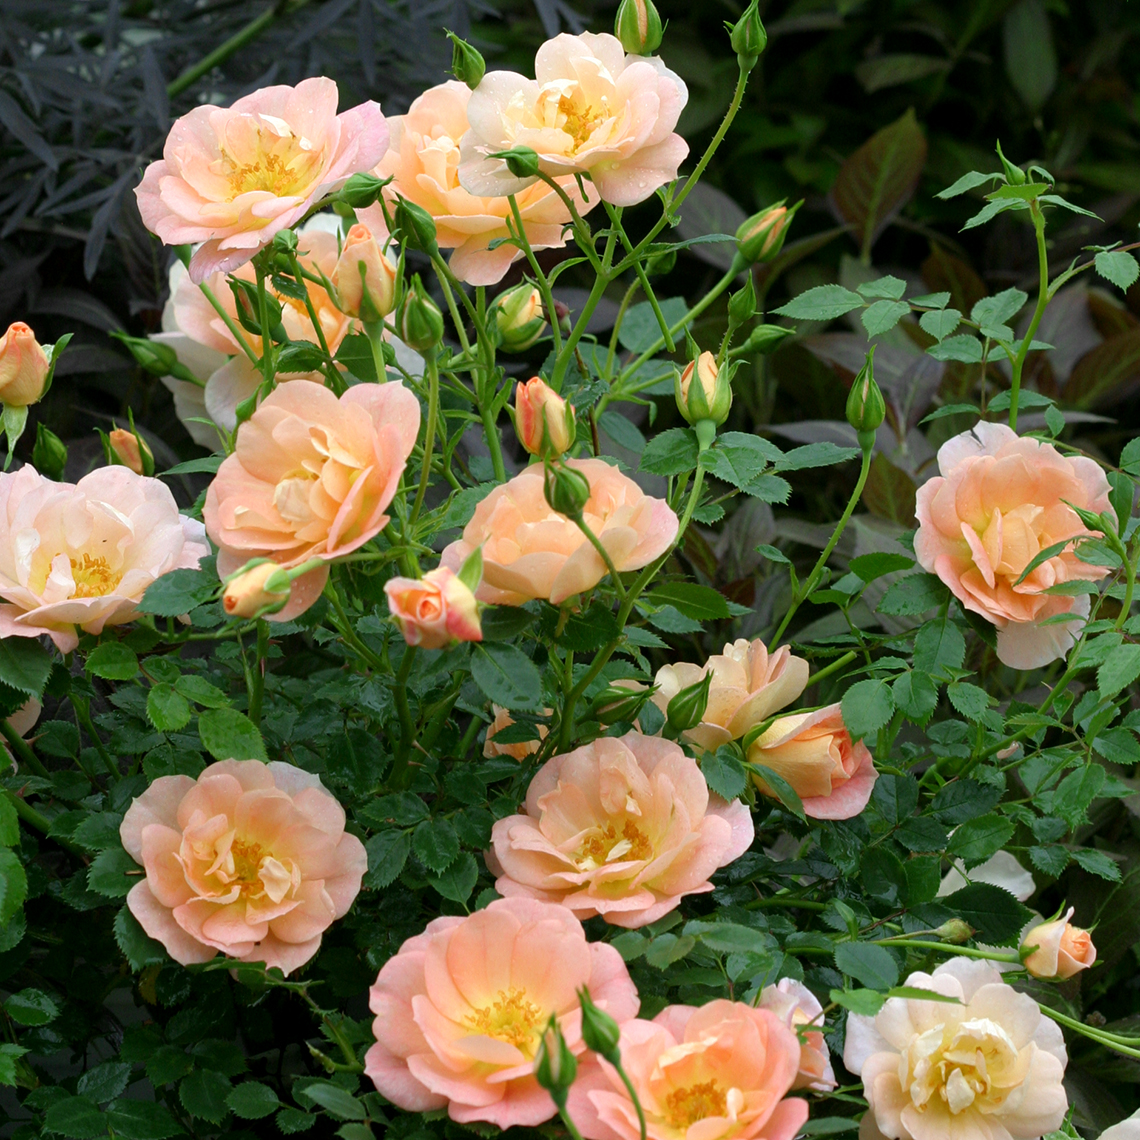 Abundant blooms on Oso Easy Peachy Cream Rose